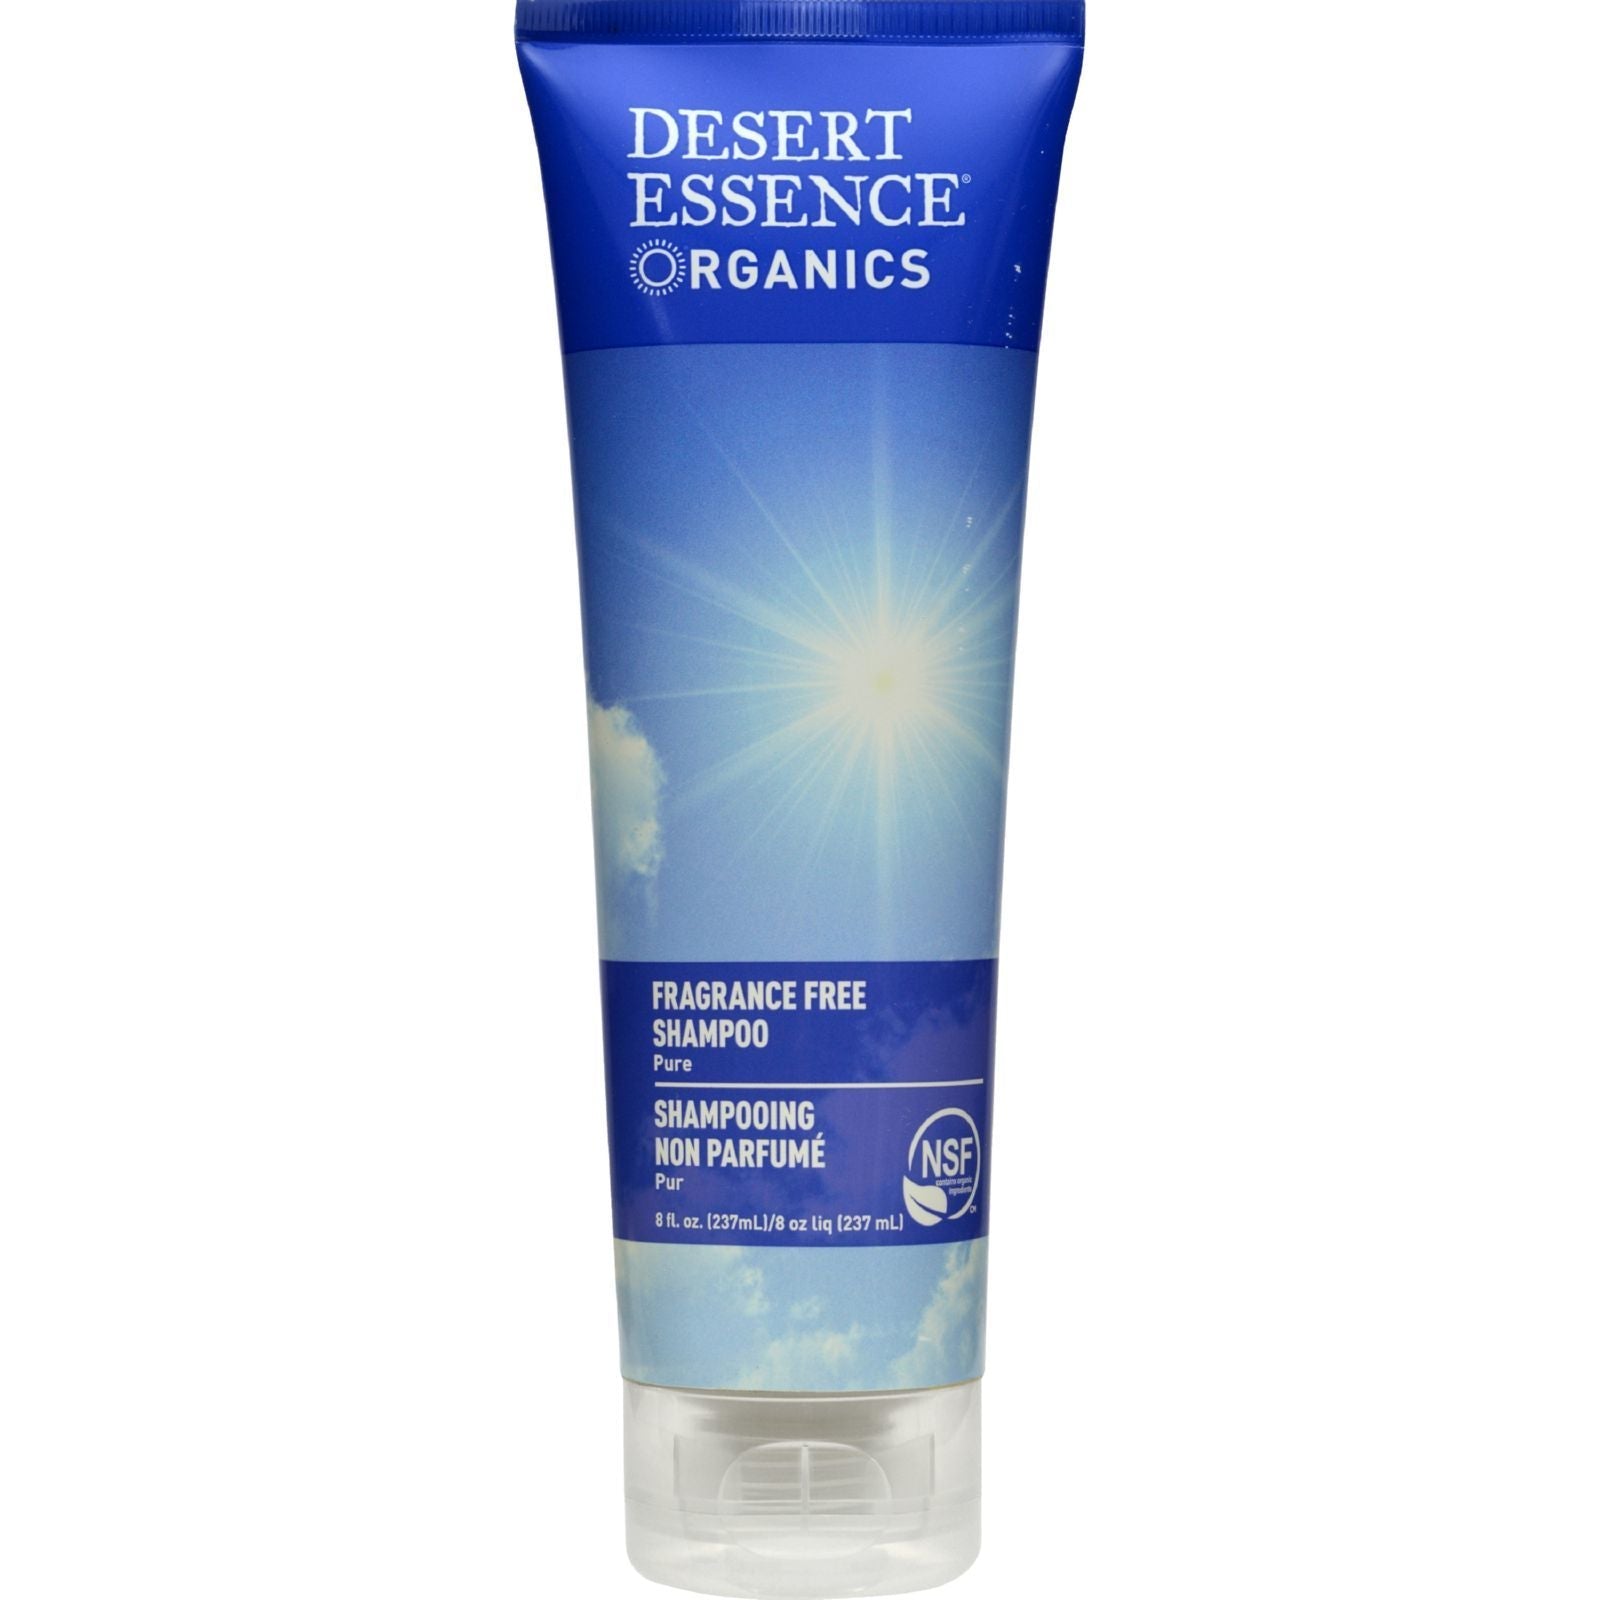 Desert Essence - Pure Shampoo Fragrance Free - 8 fl oz